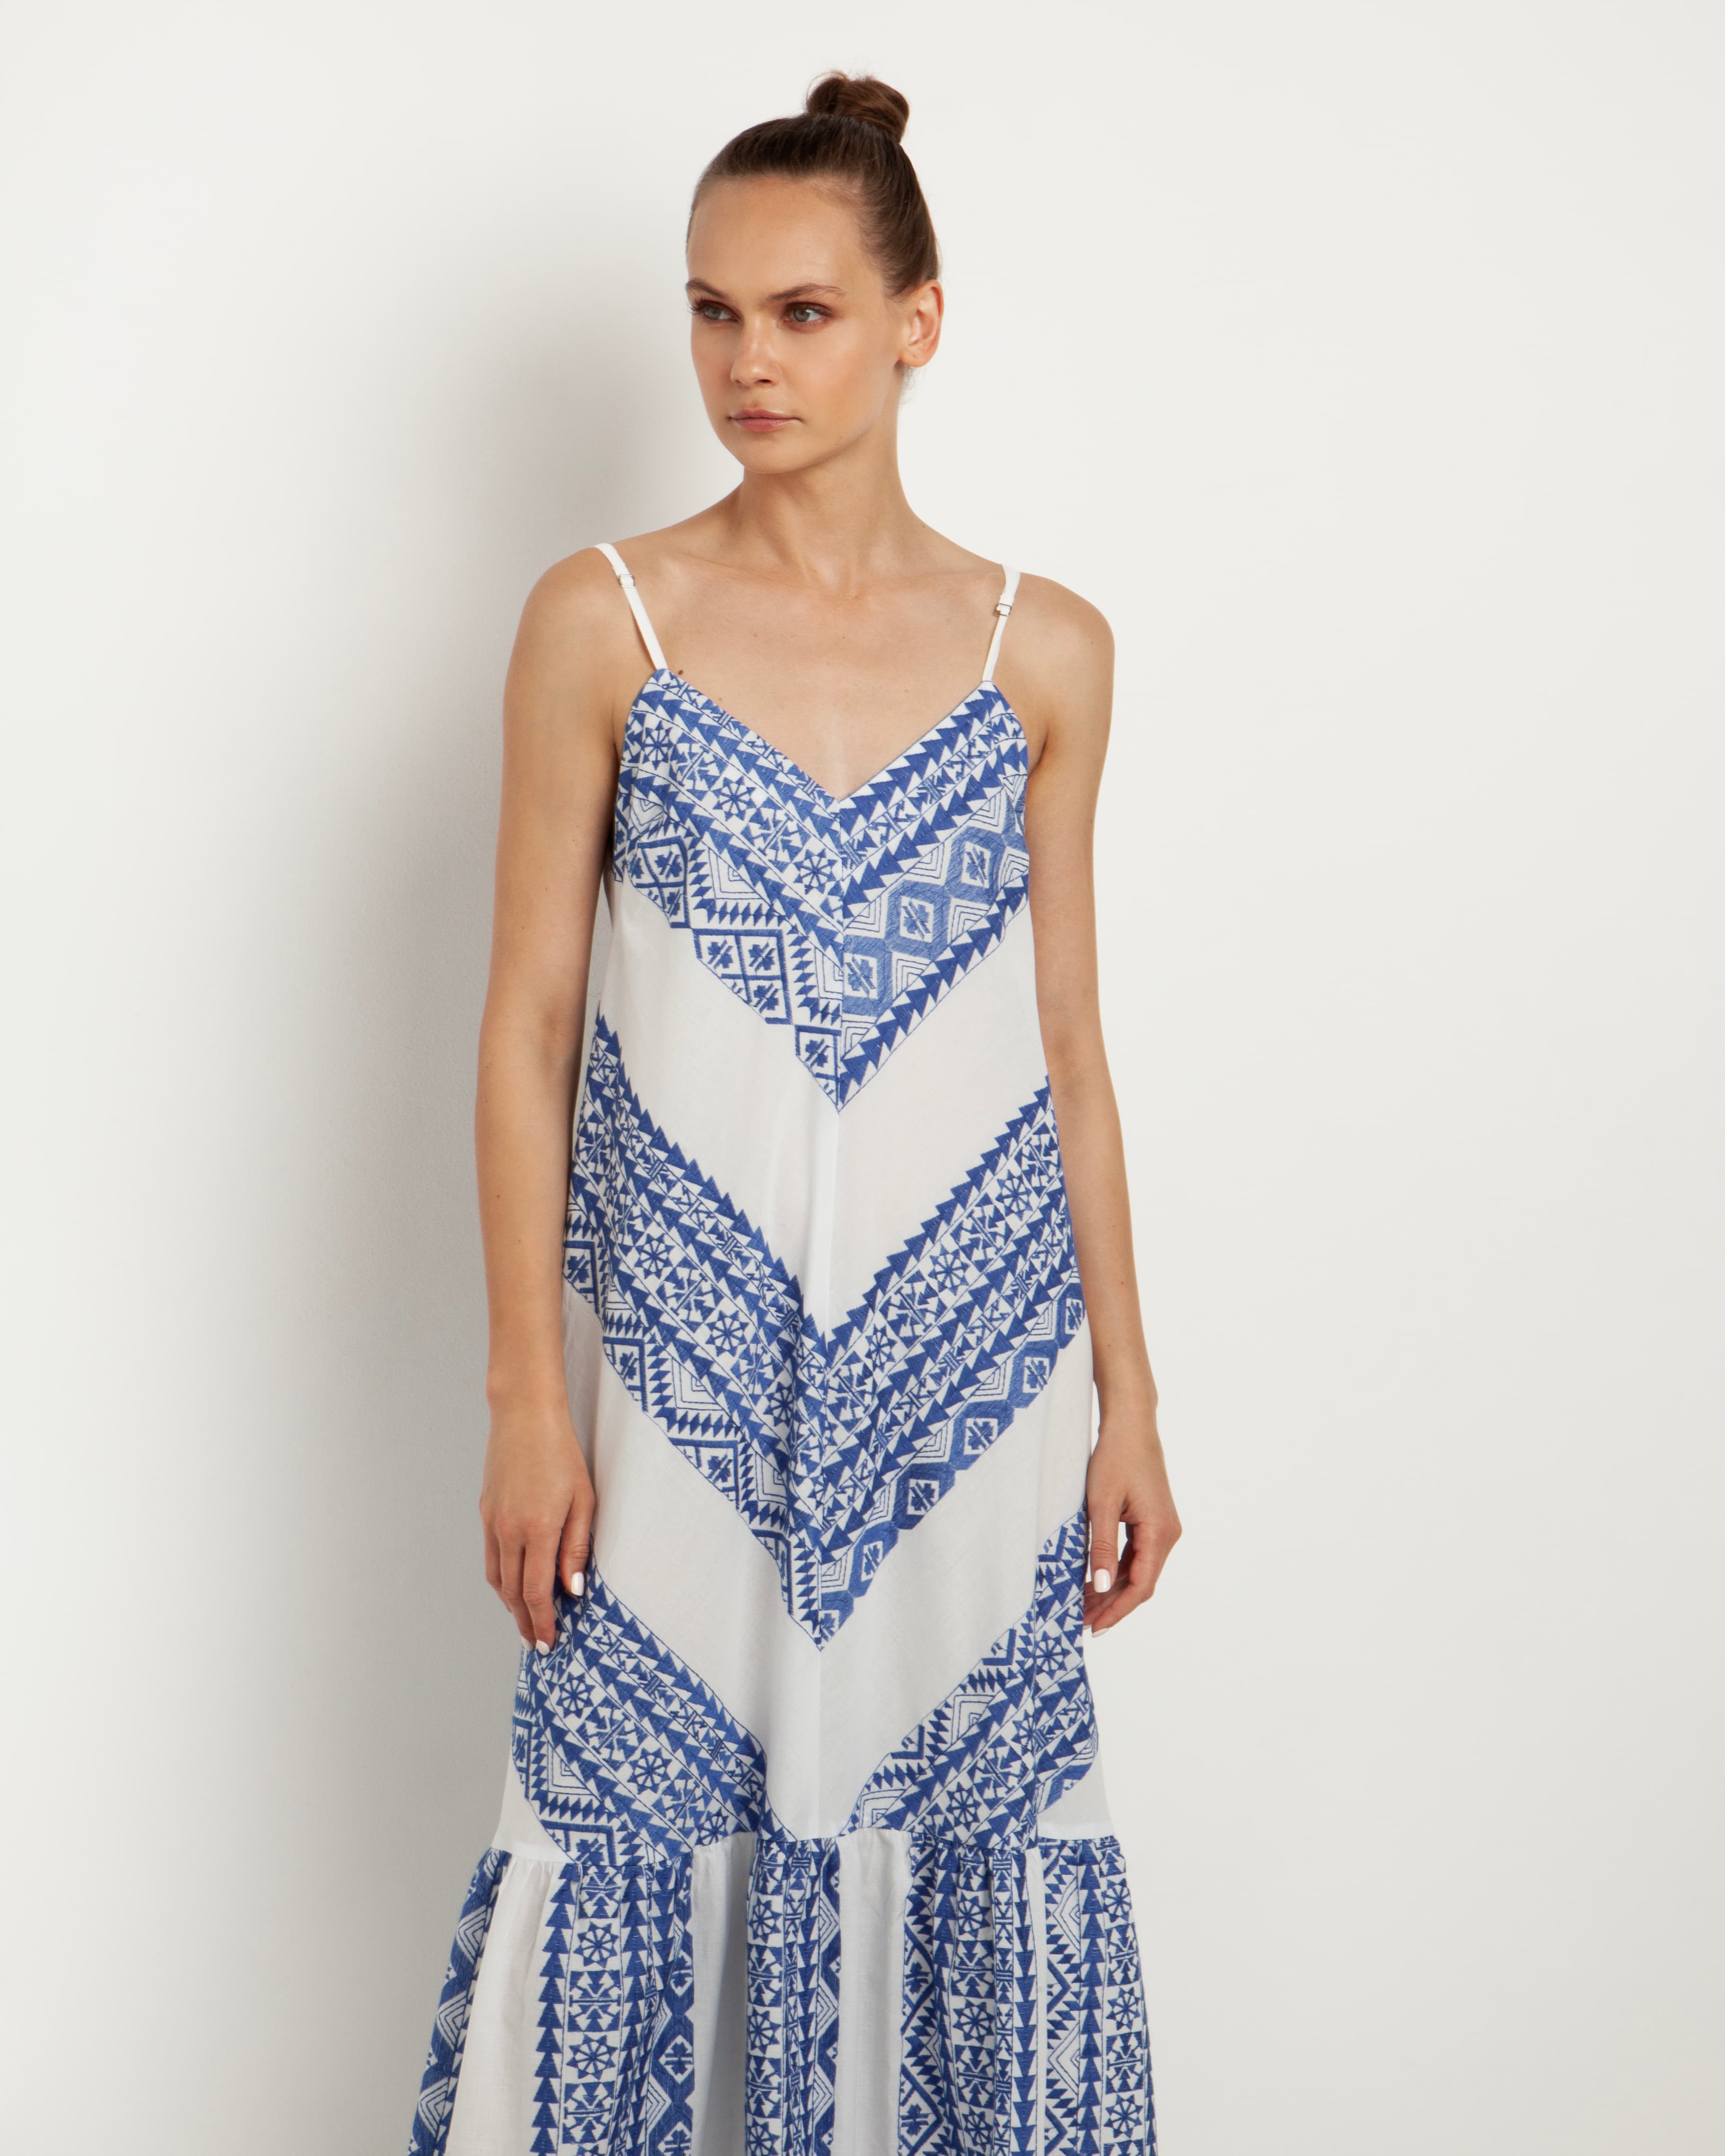 Greek Archaic Kori White and blue summer dress